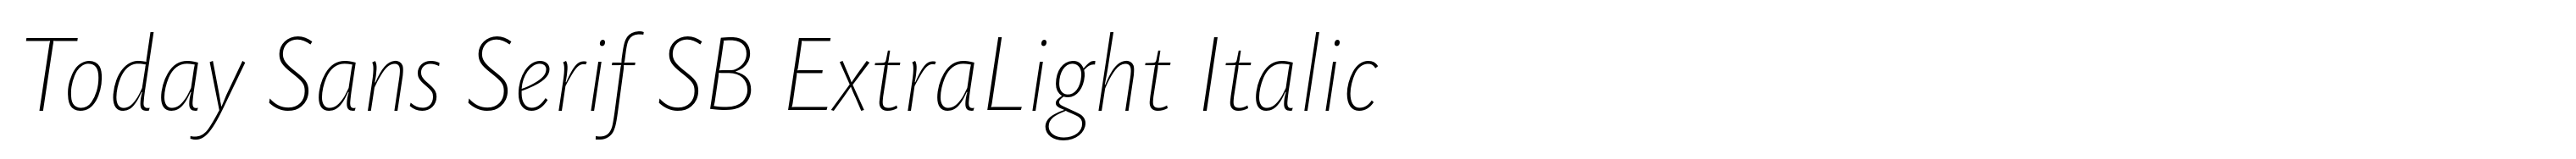 Today Sans Serif SB ExtraLight Italic